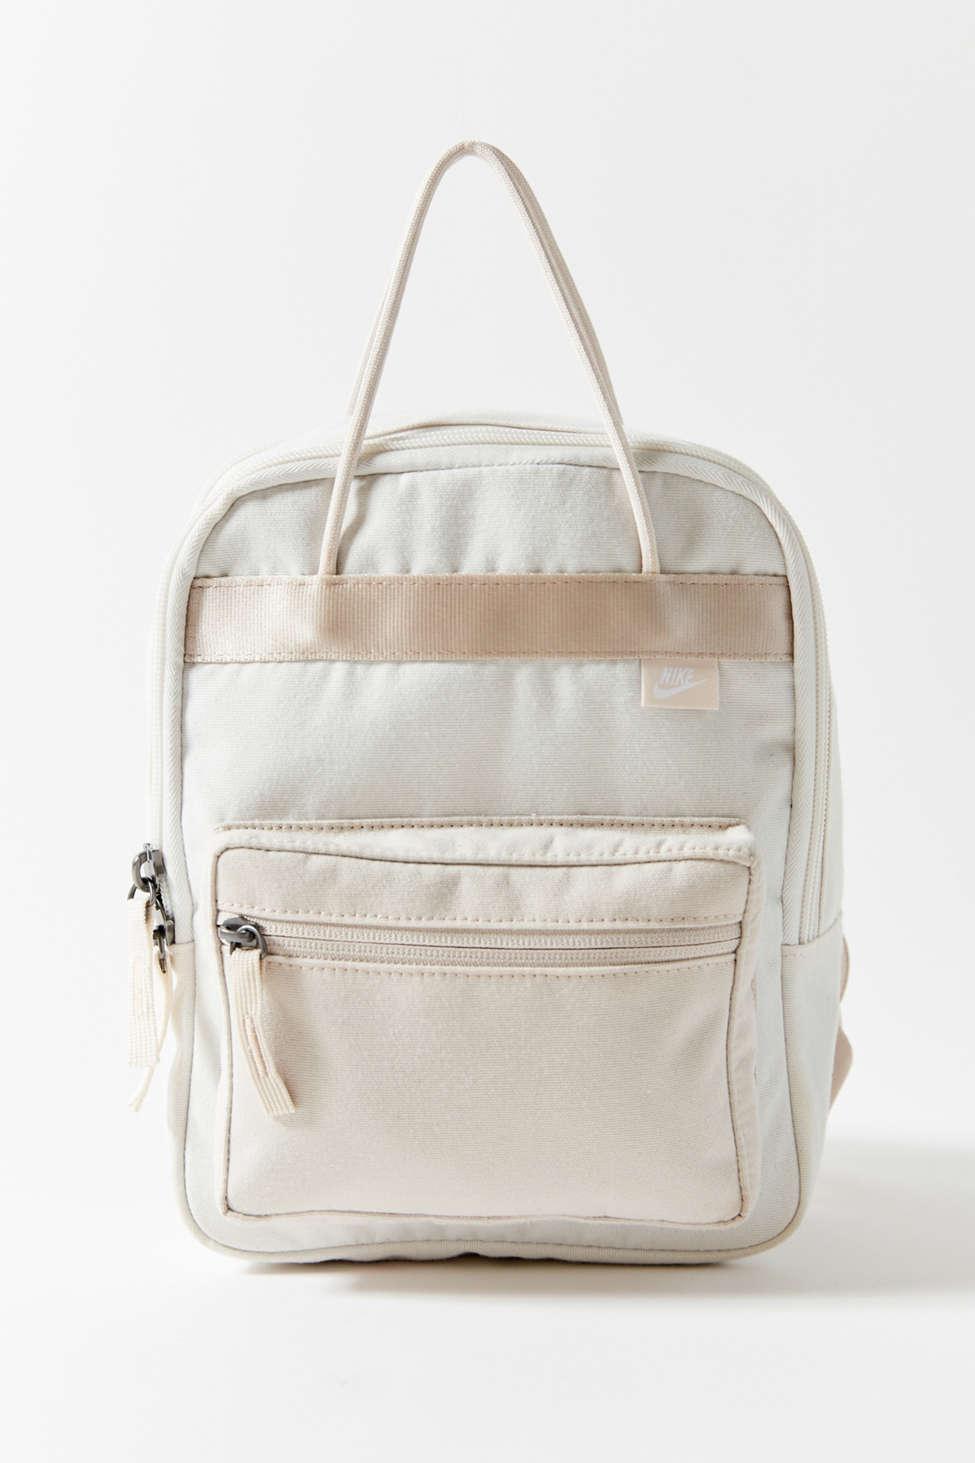 Nike Canvas Tanjun Mini Backpack in 